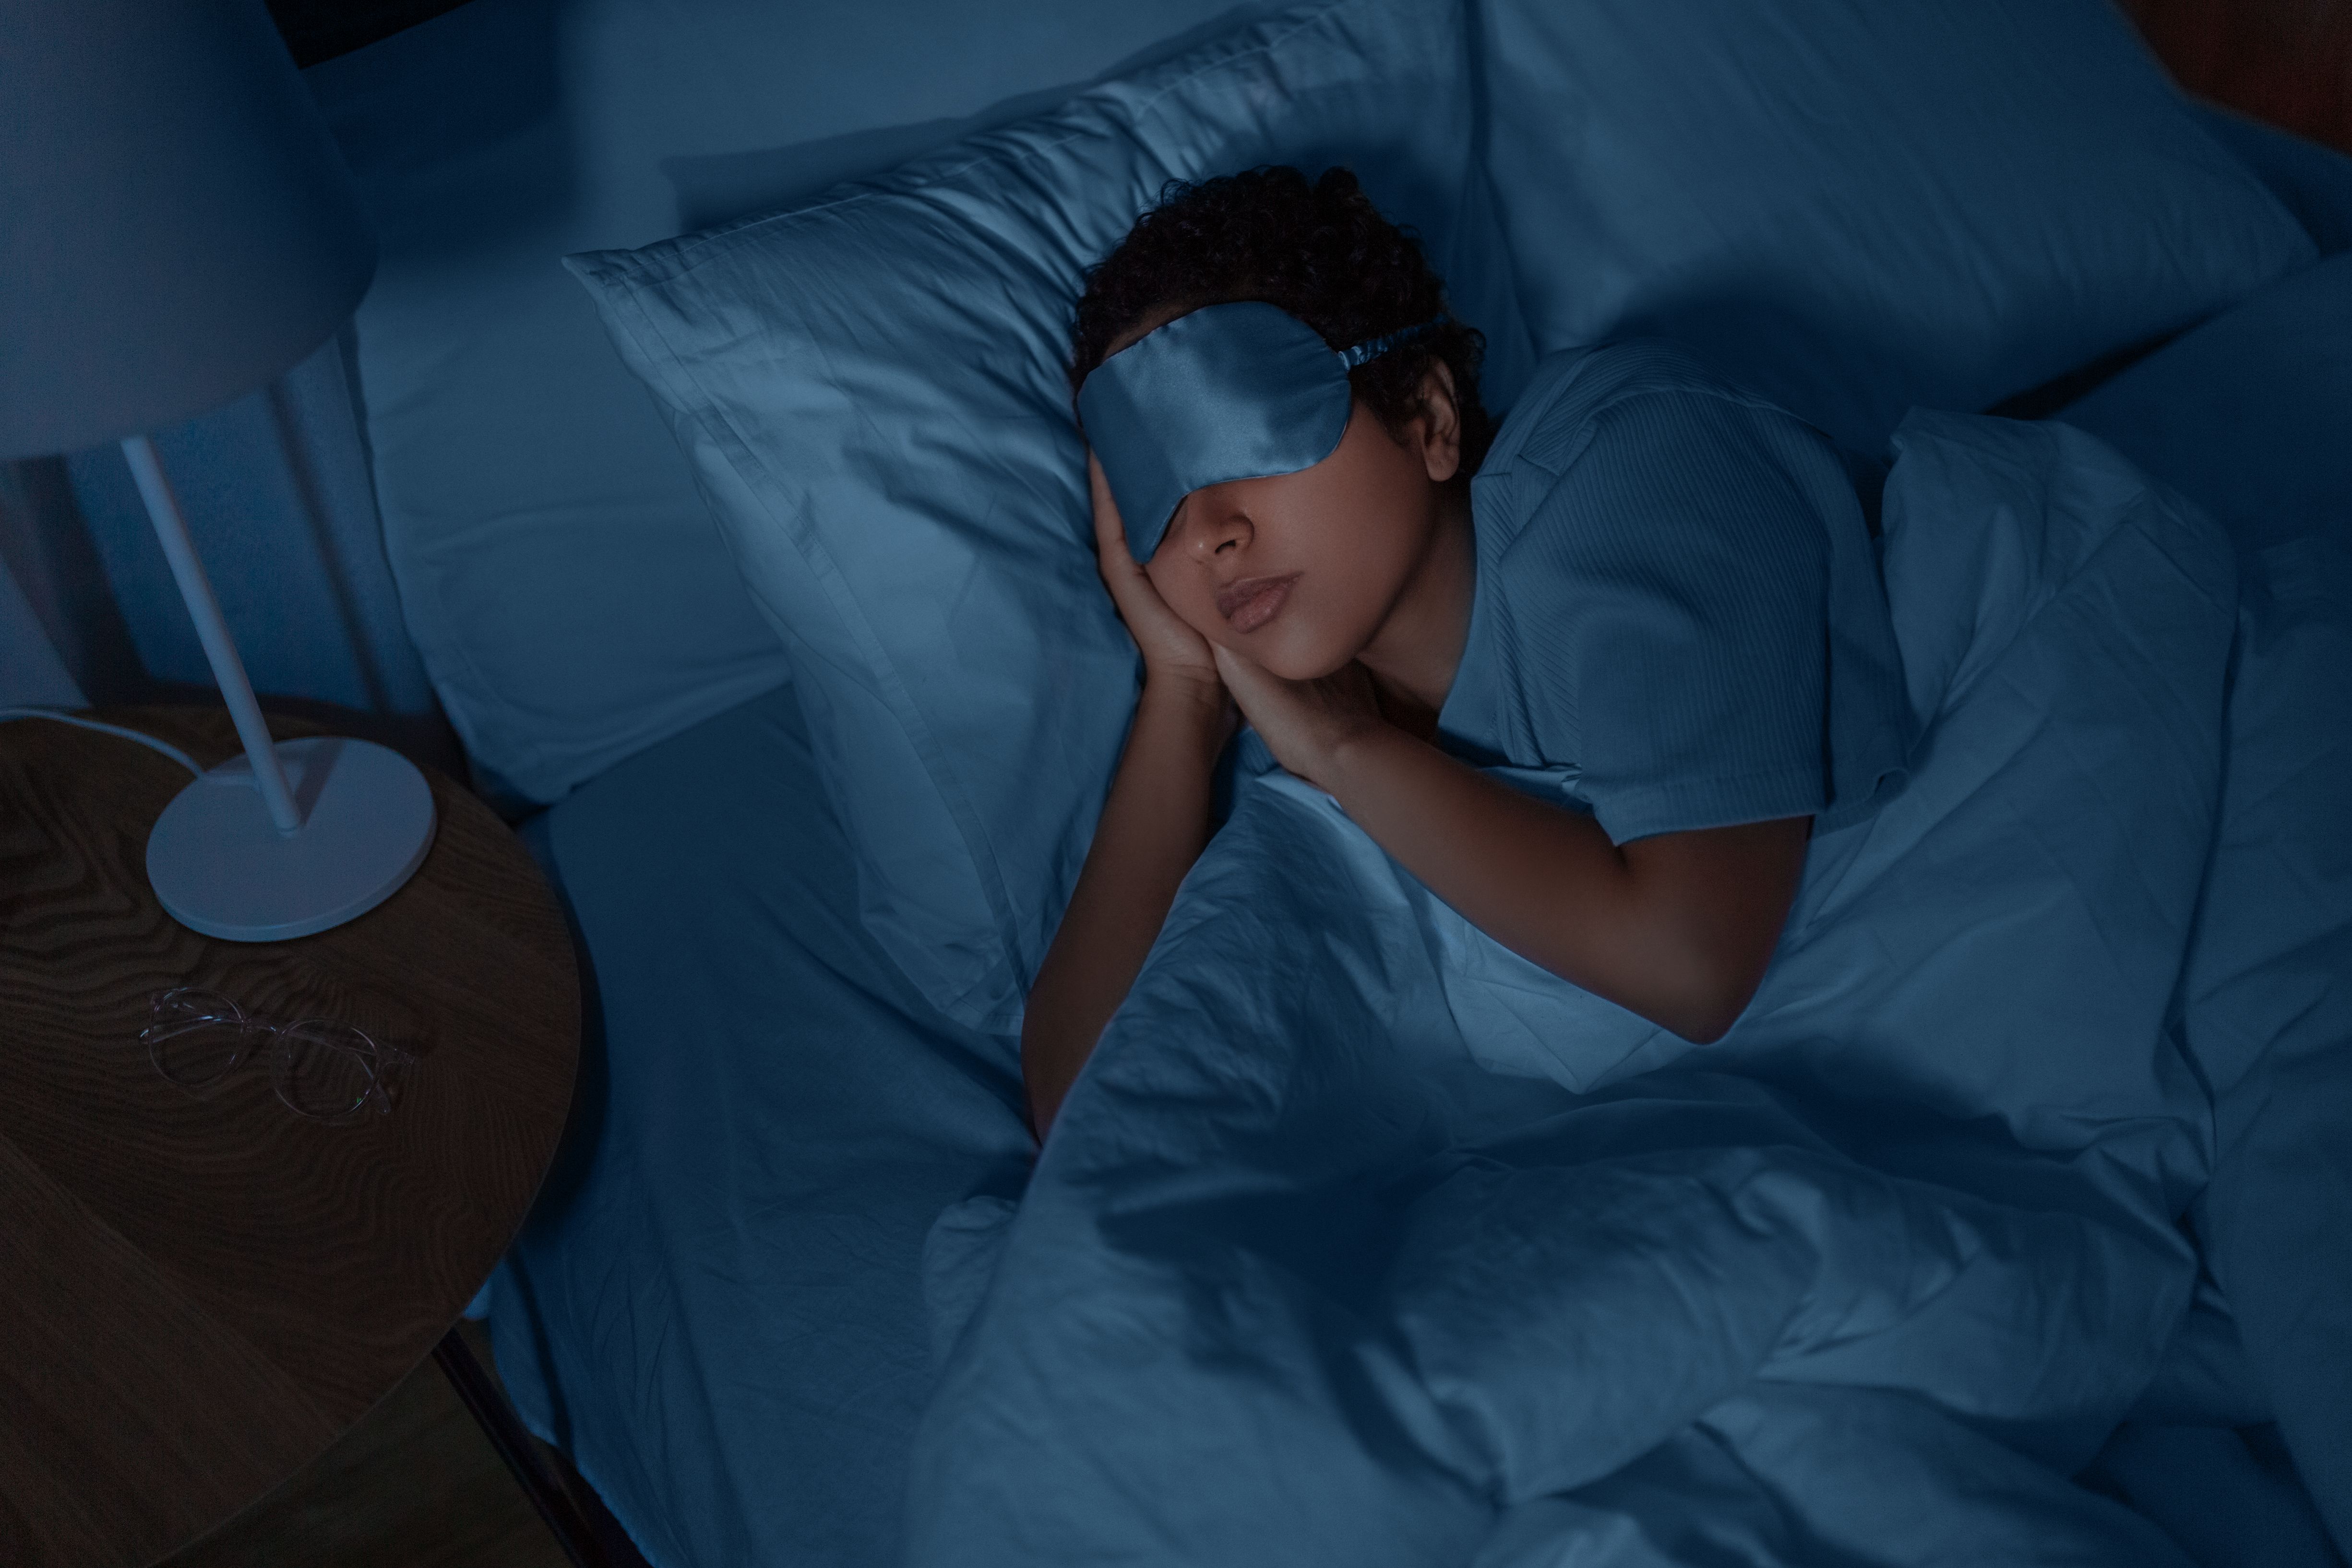 Sleepless nights make for selfish days, new study suggests | CNN